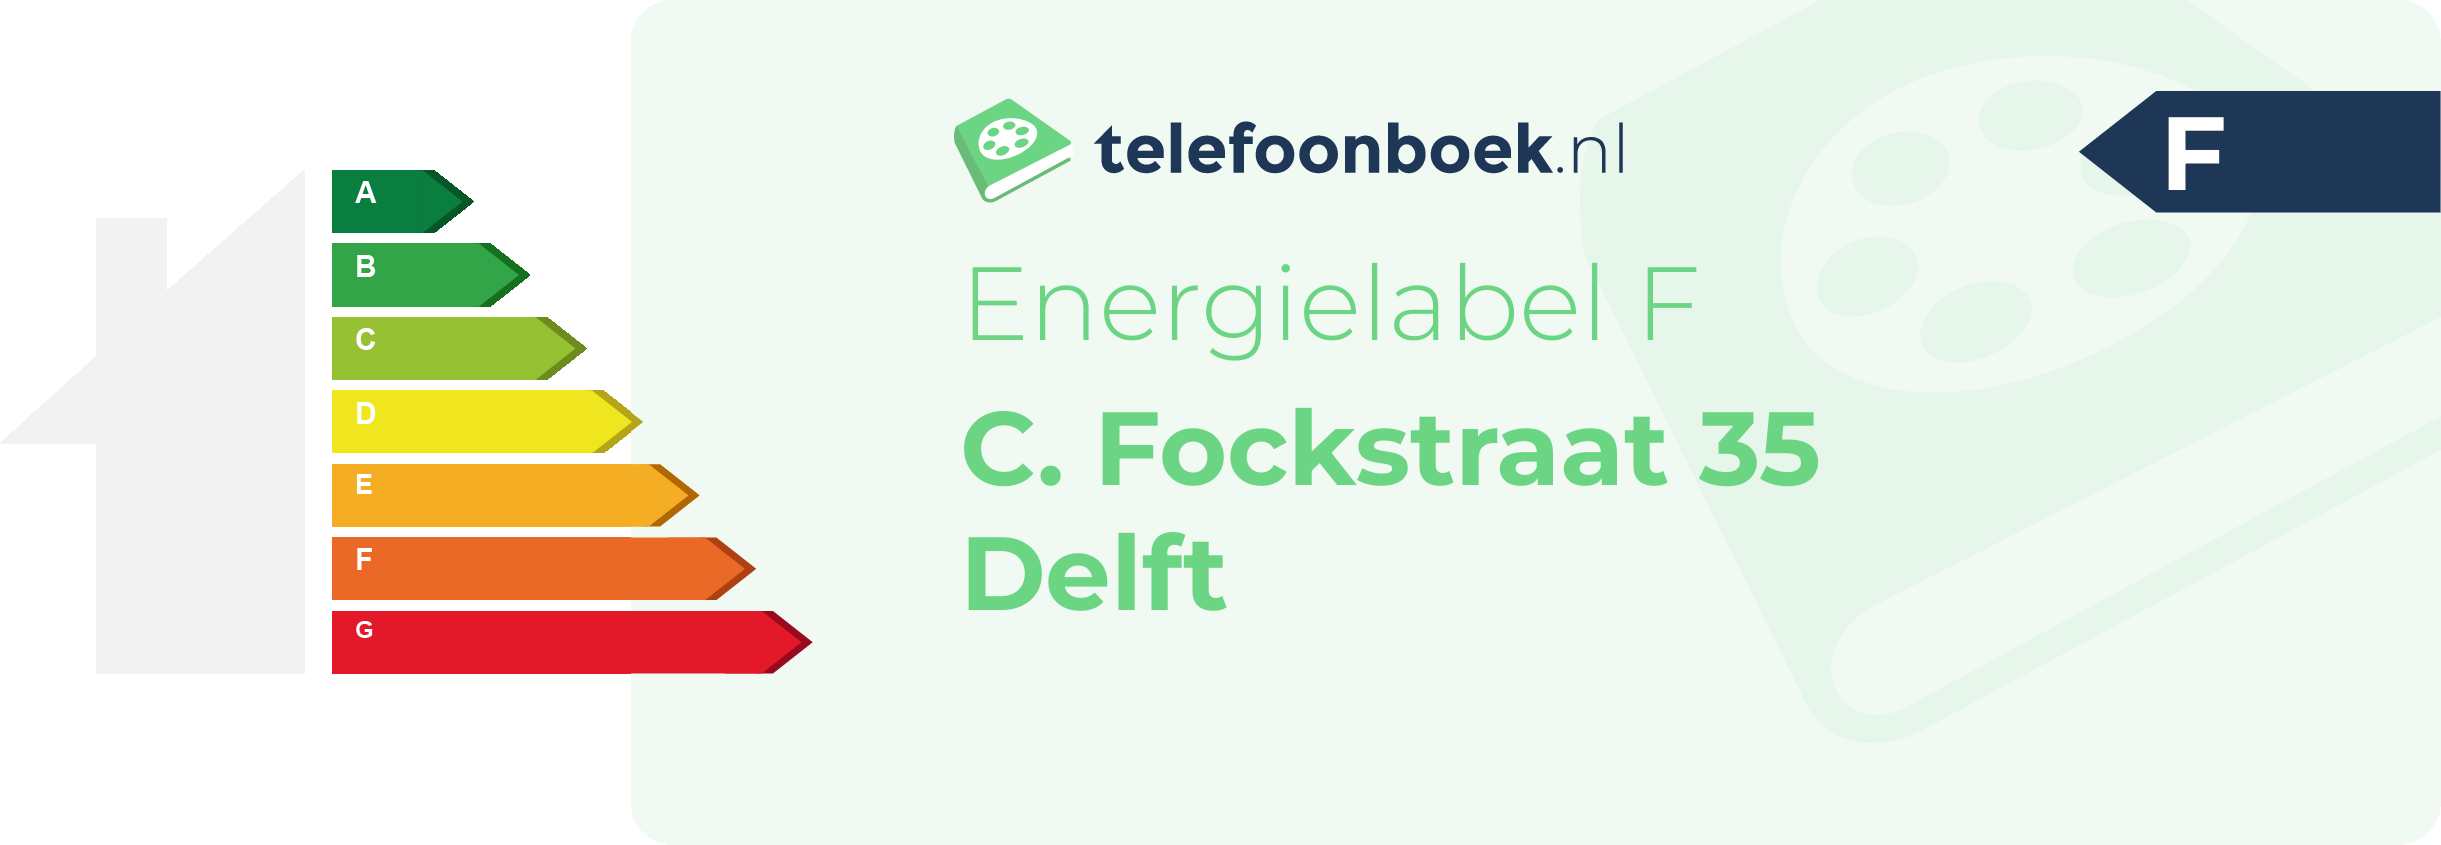 Energielabel C. Fockstraat 35 Delft